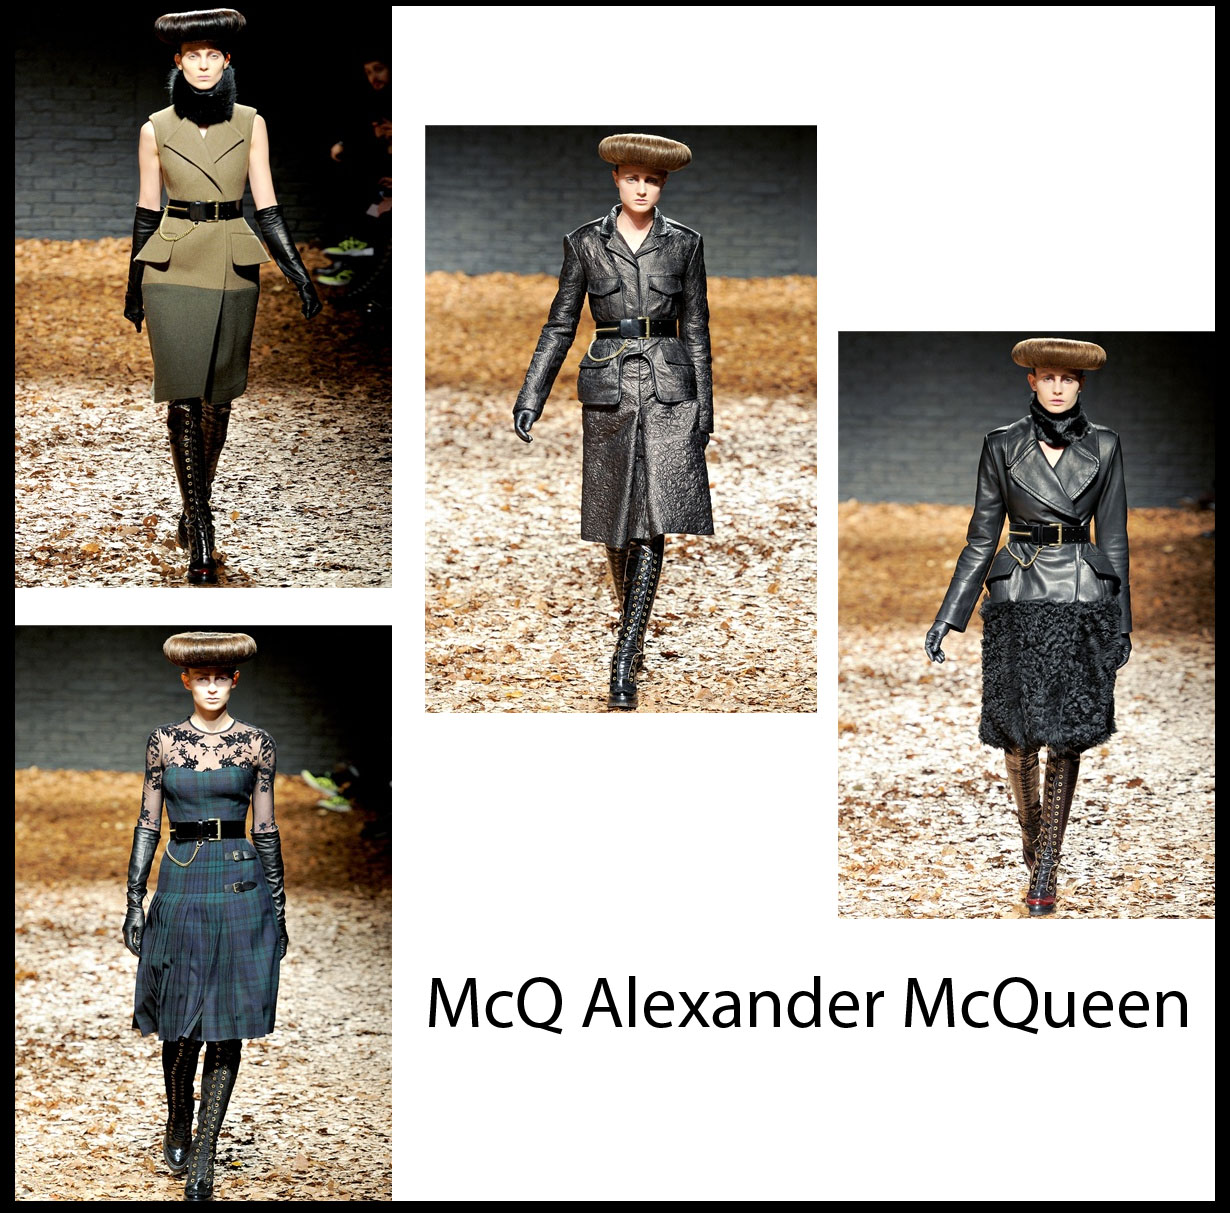 London Fashion Week 2012: la maison Alexander McQueen lancia la linea McQ